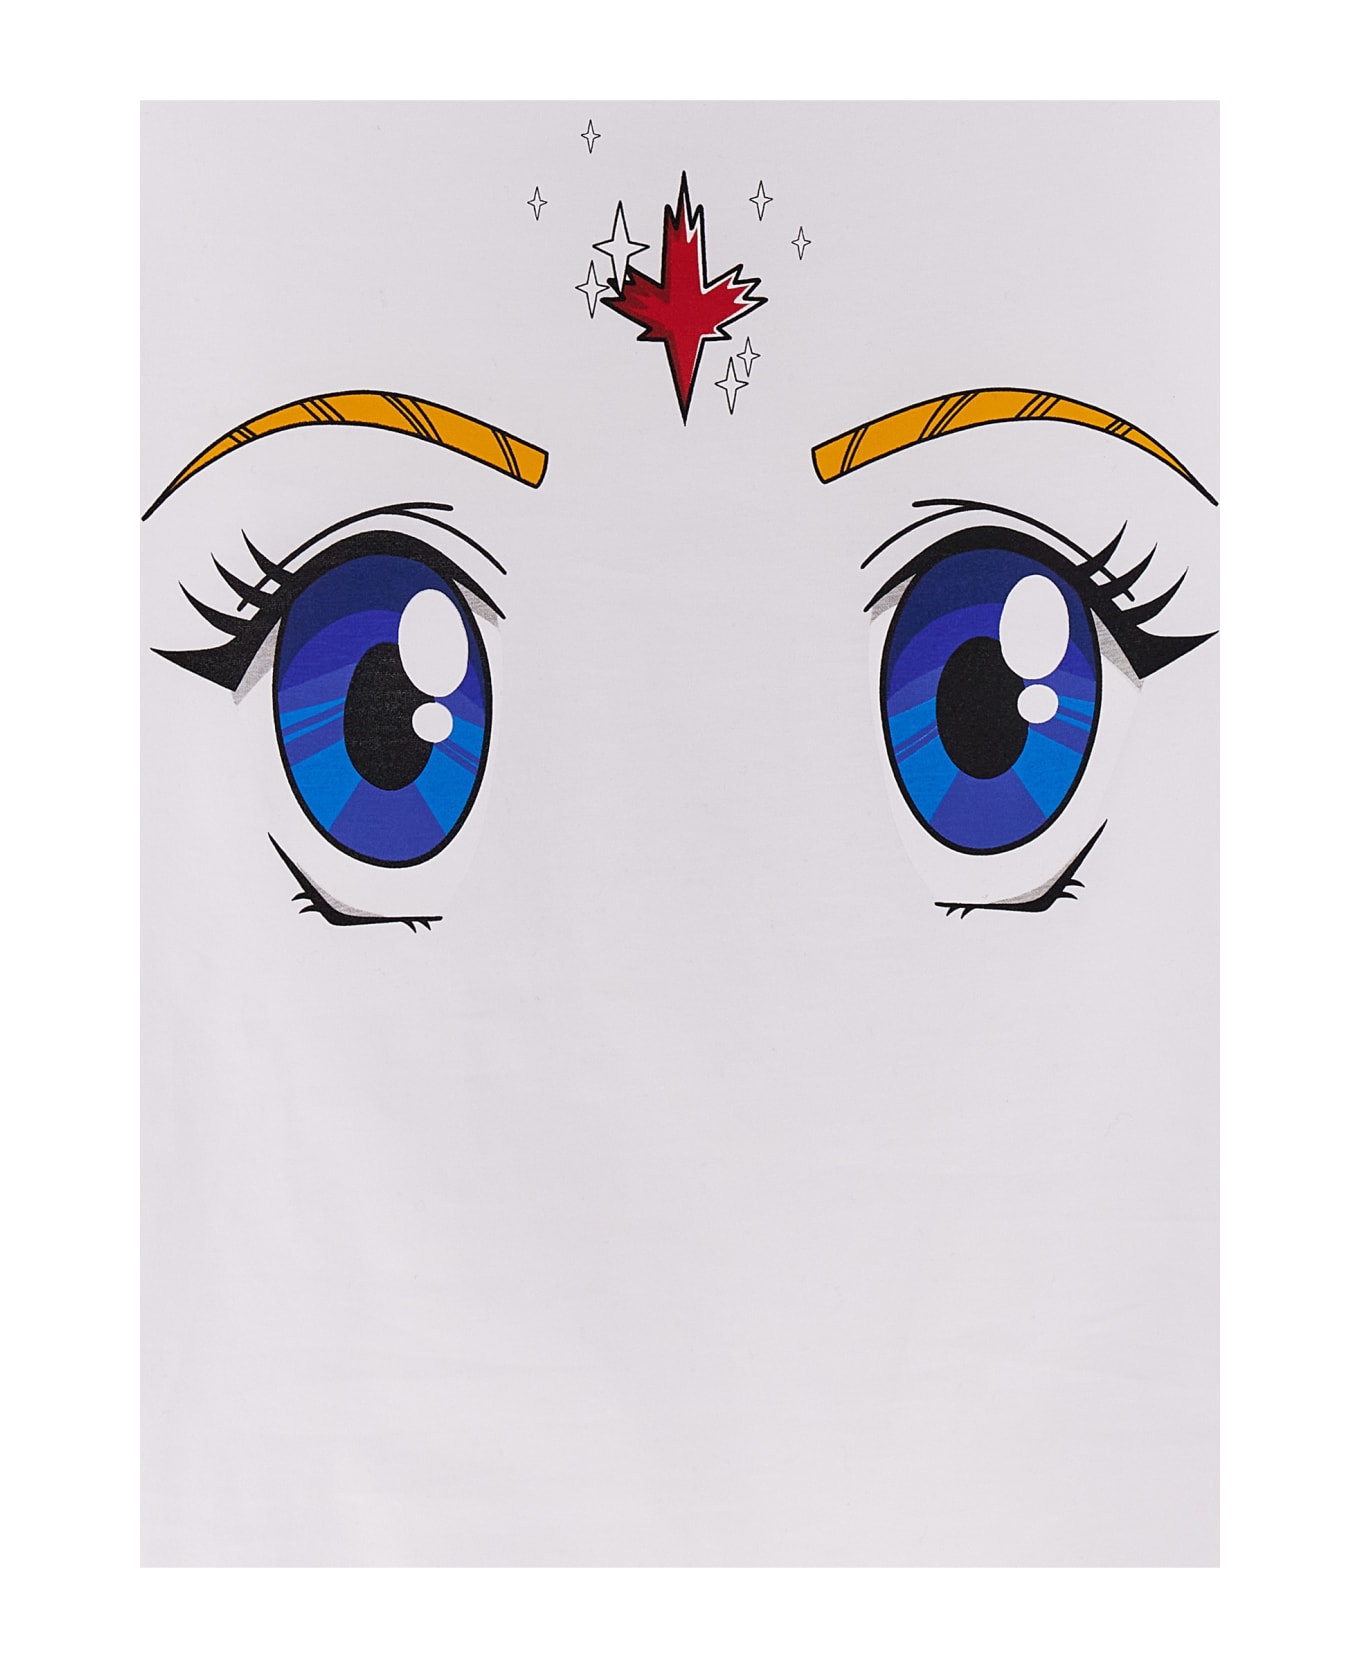 Dsquared2 Sailor Moon T-shirt - WHITE